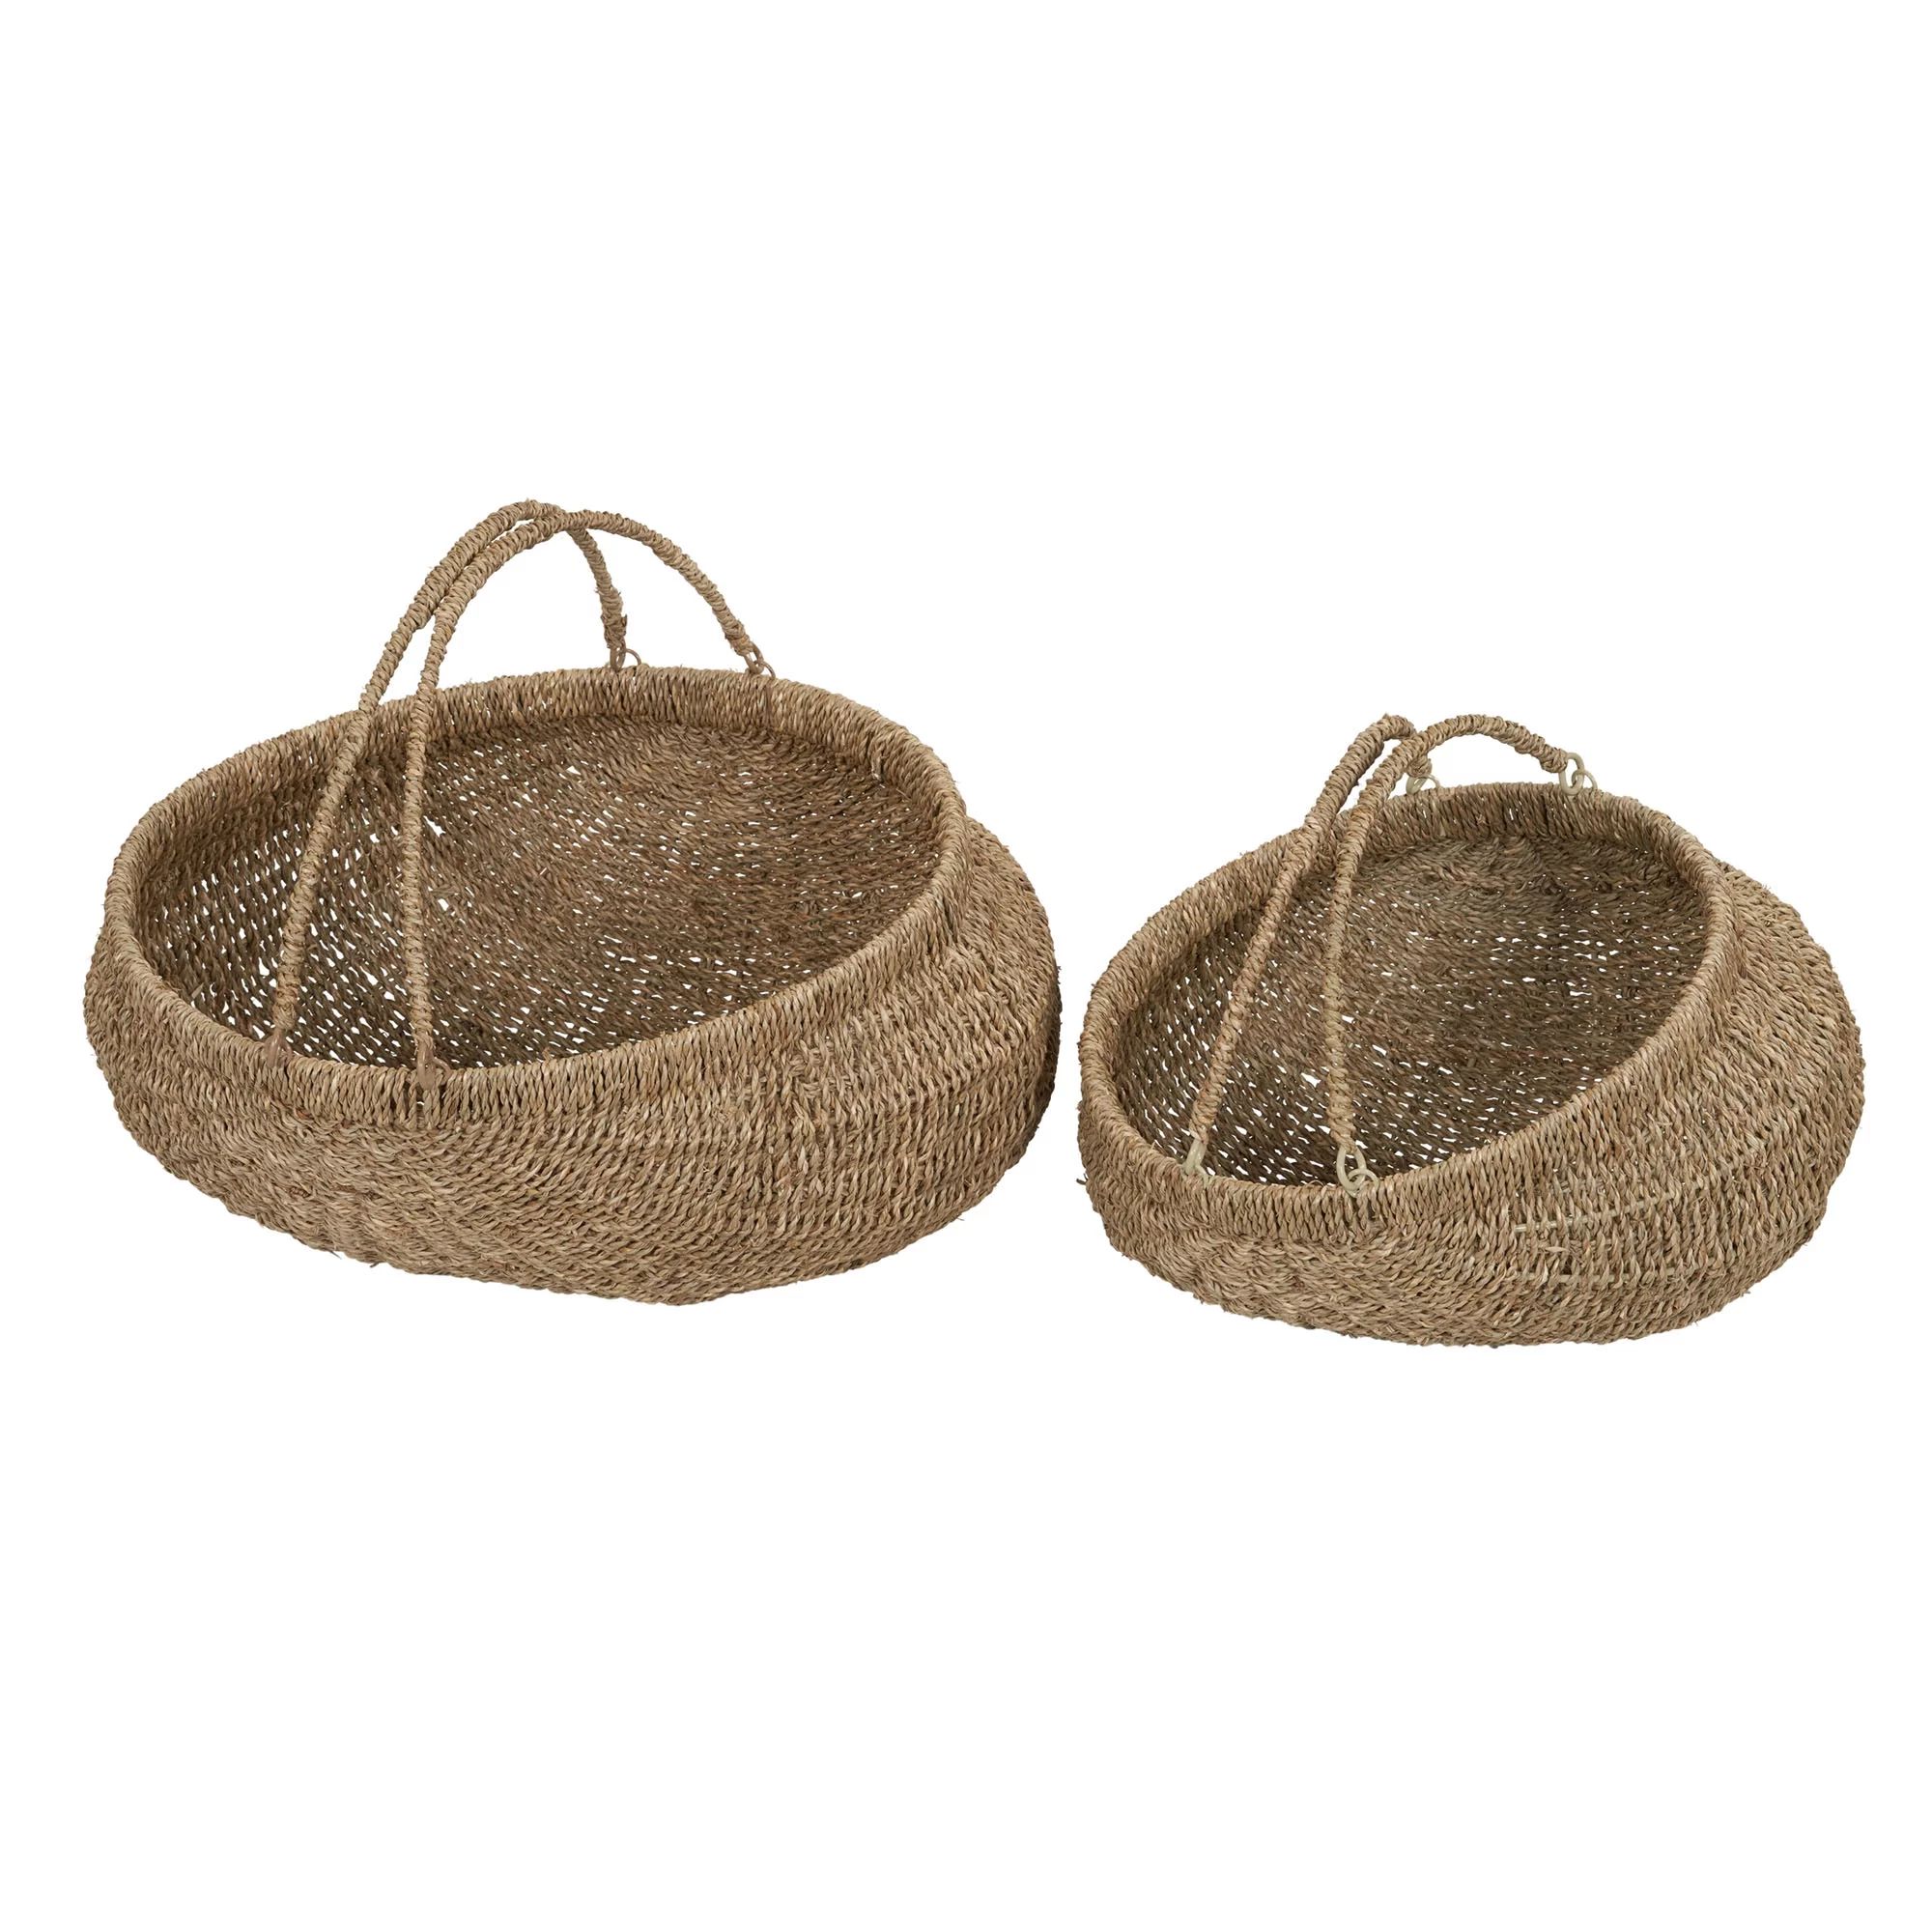 Household Essentials Flower Basket 2pc Set in Natural Seagrass | Walmart (US)